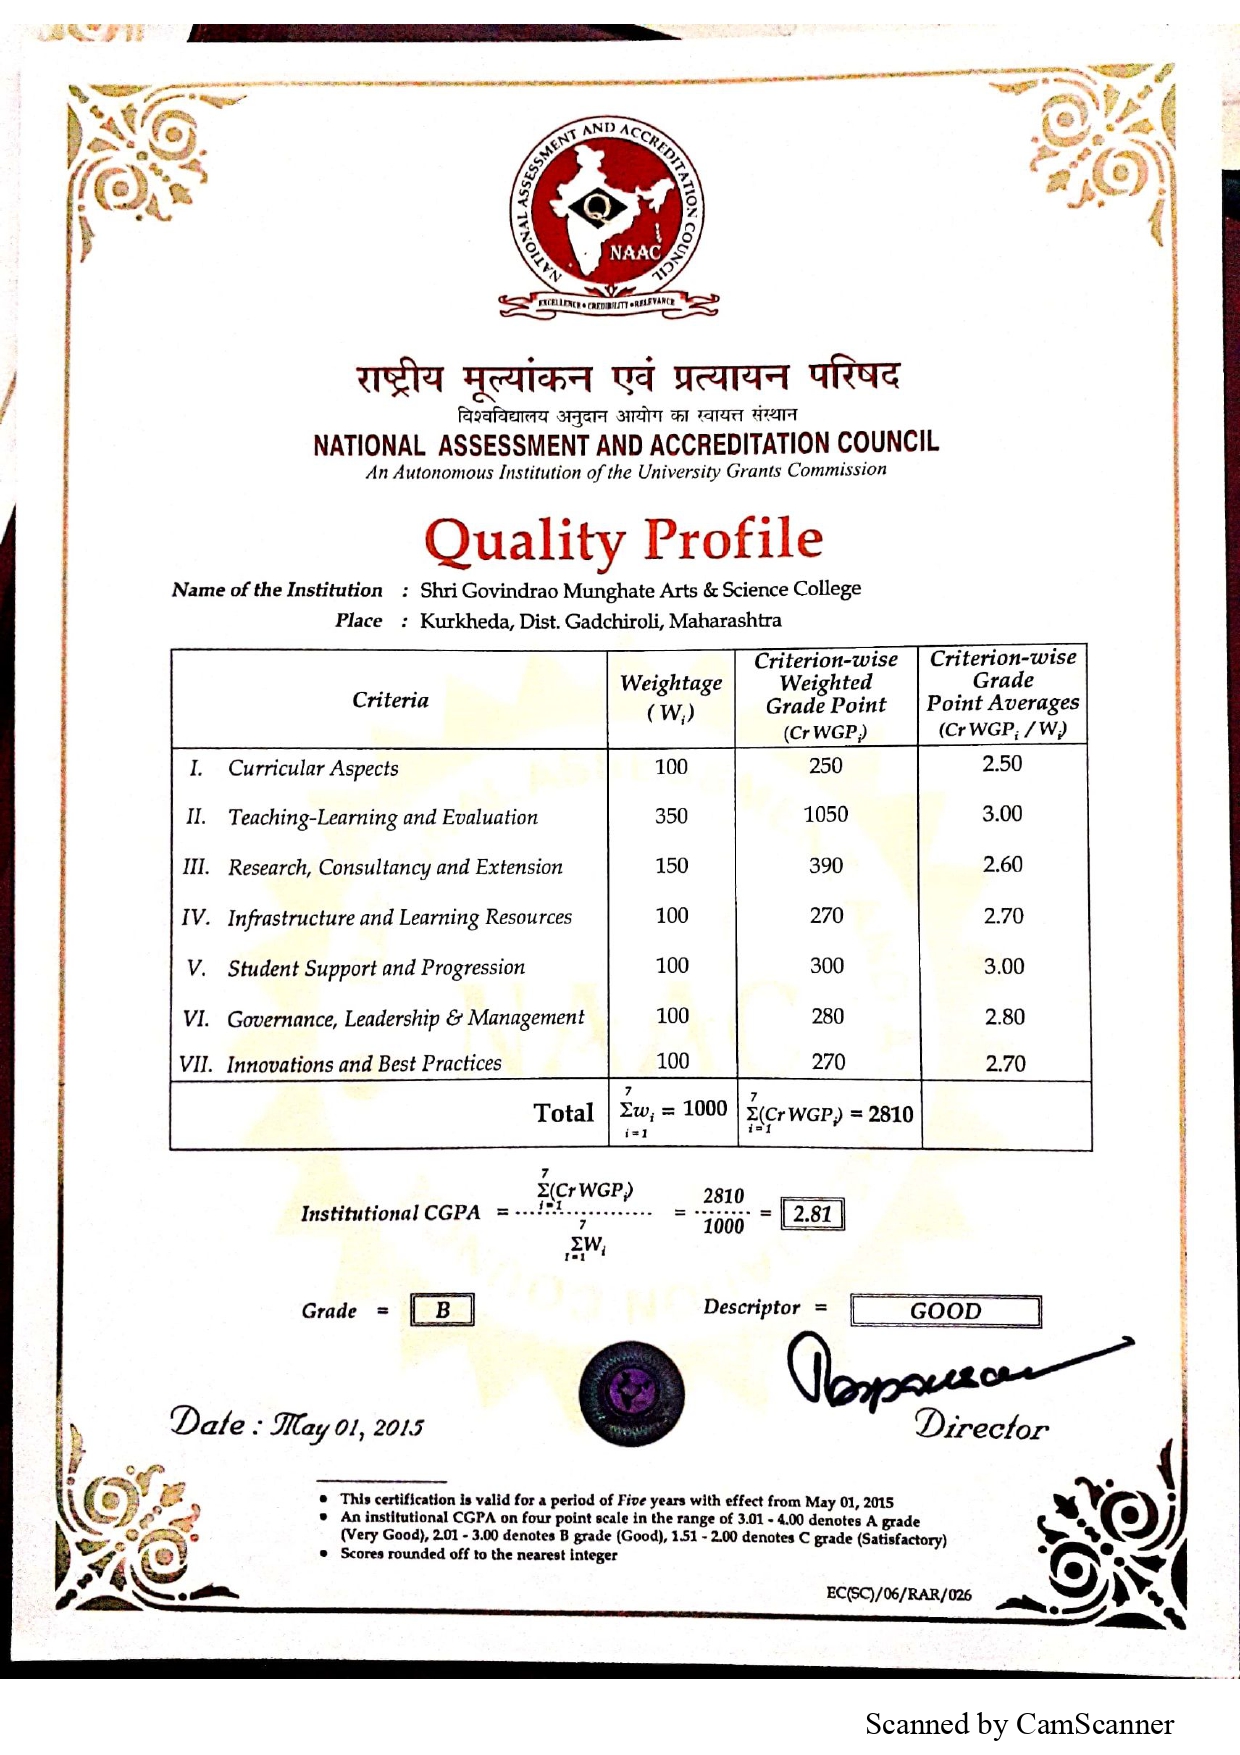 Quality Profile NAAC Cycle-II